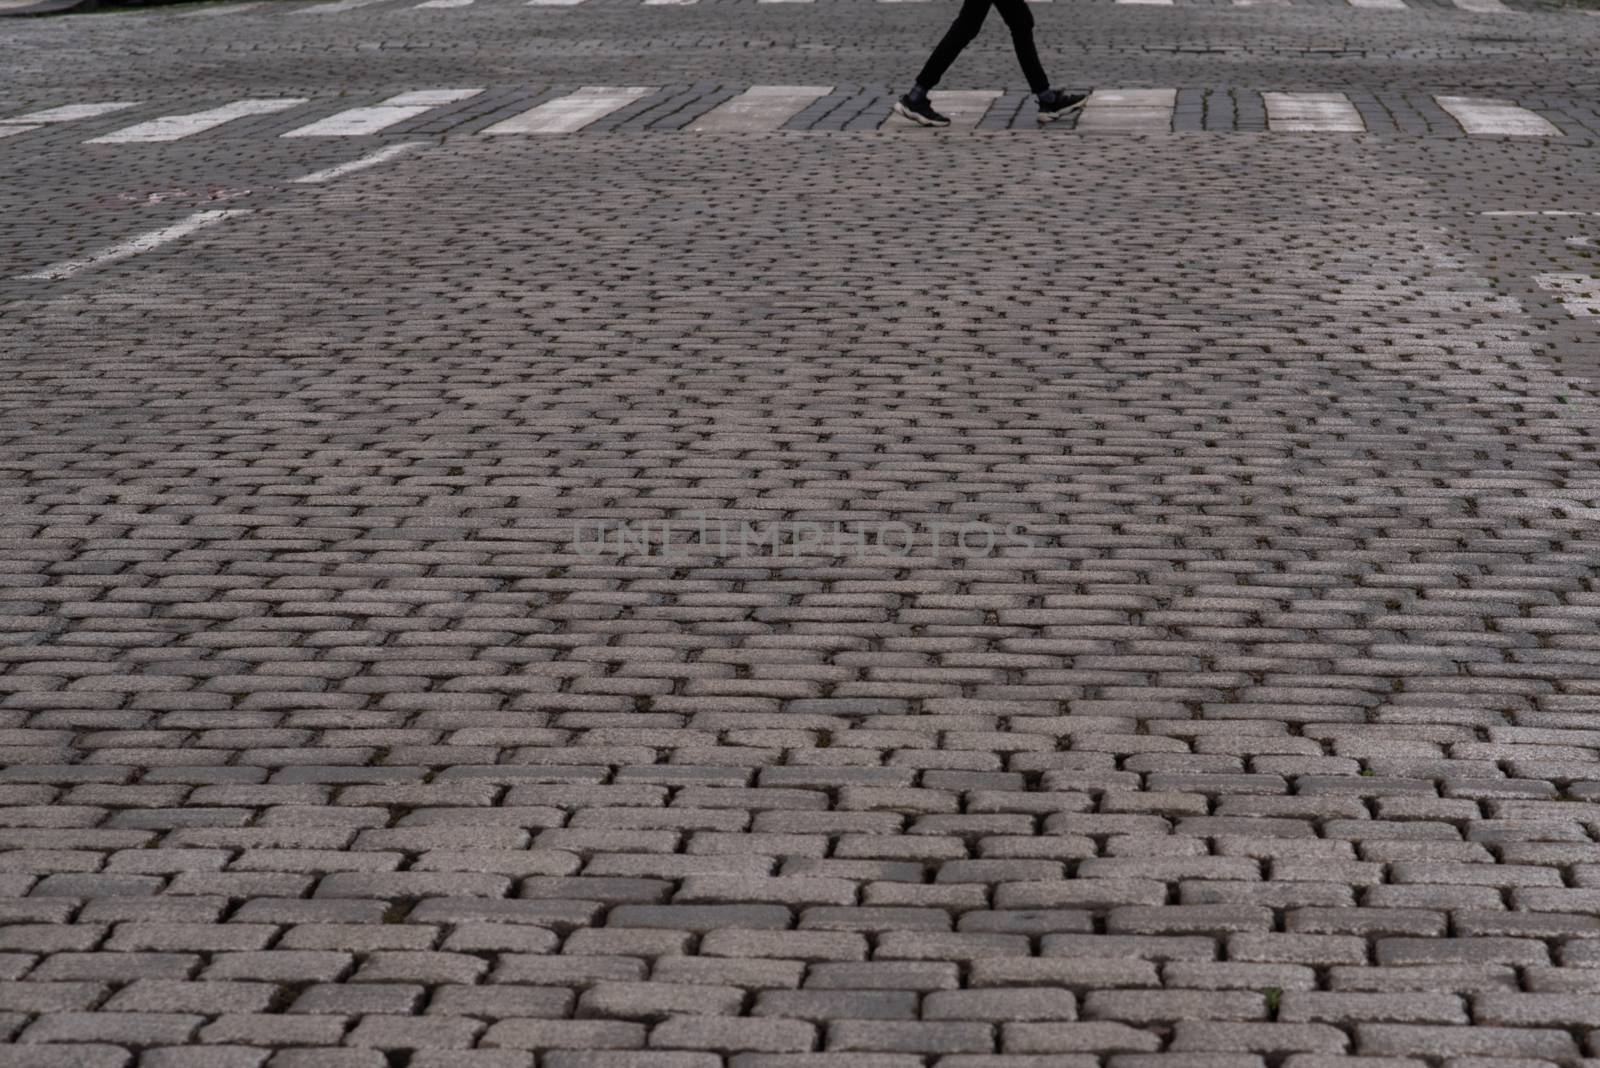 Empty street with a pedestrian walking